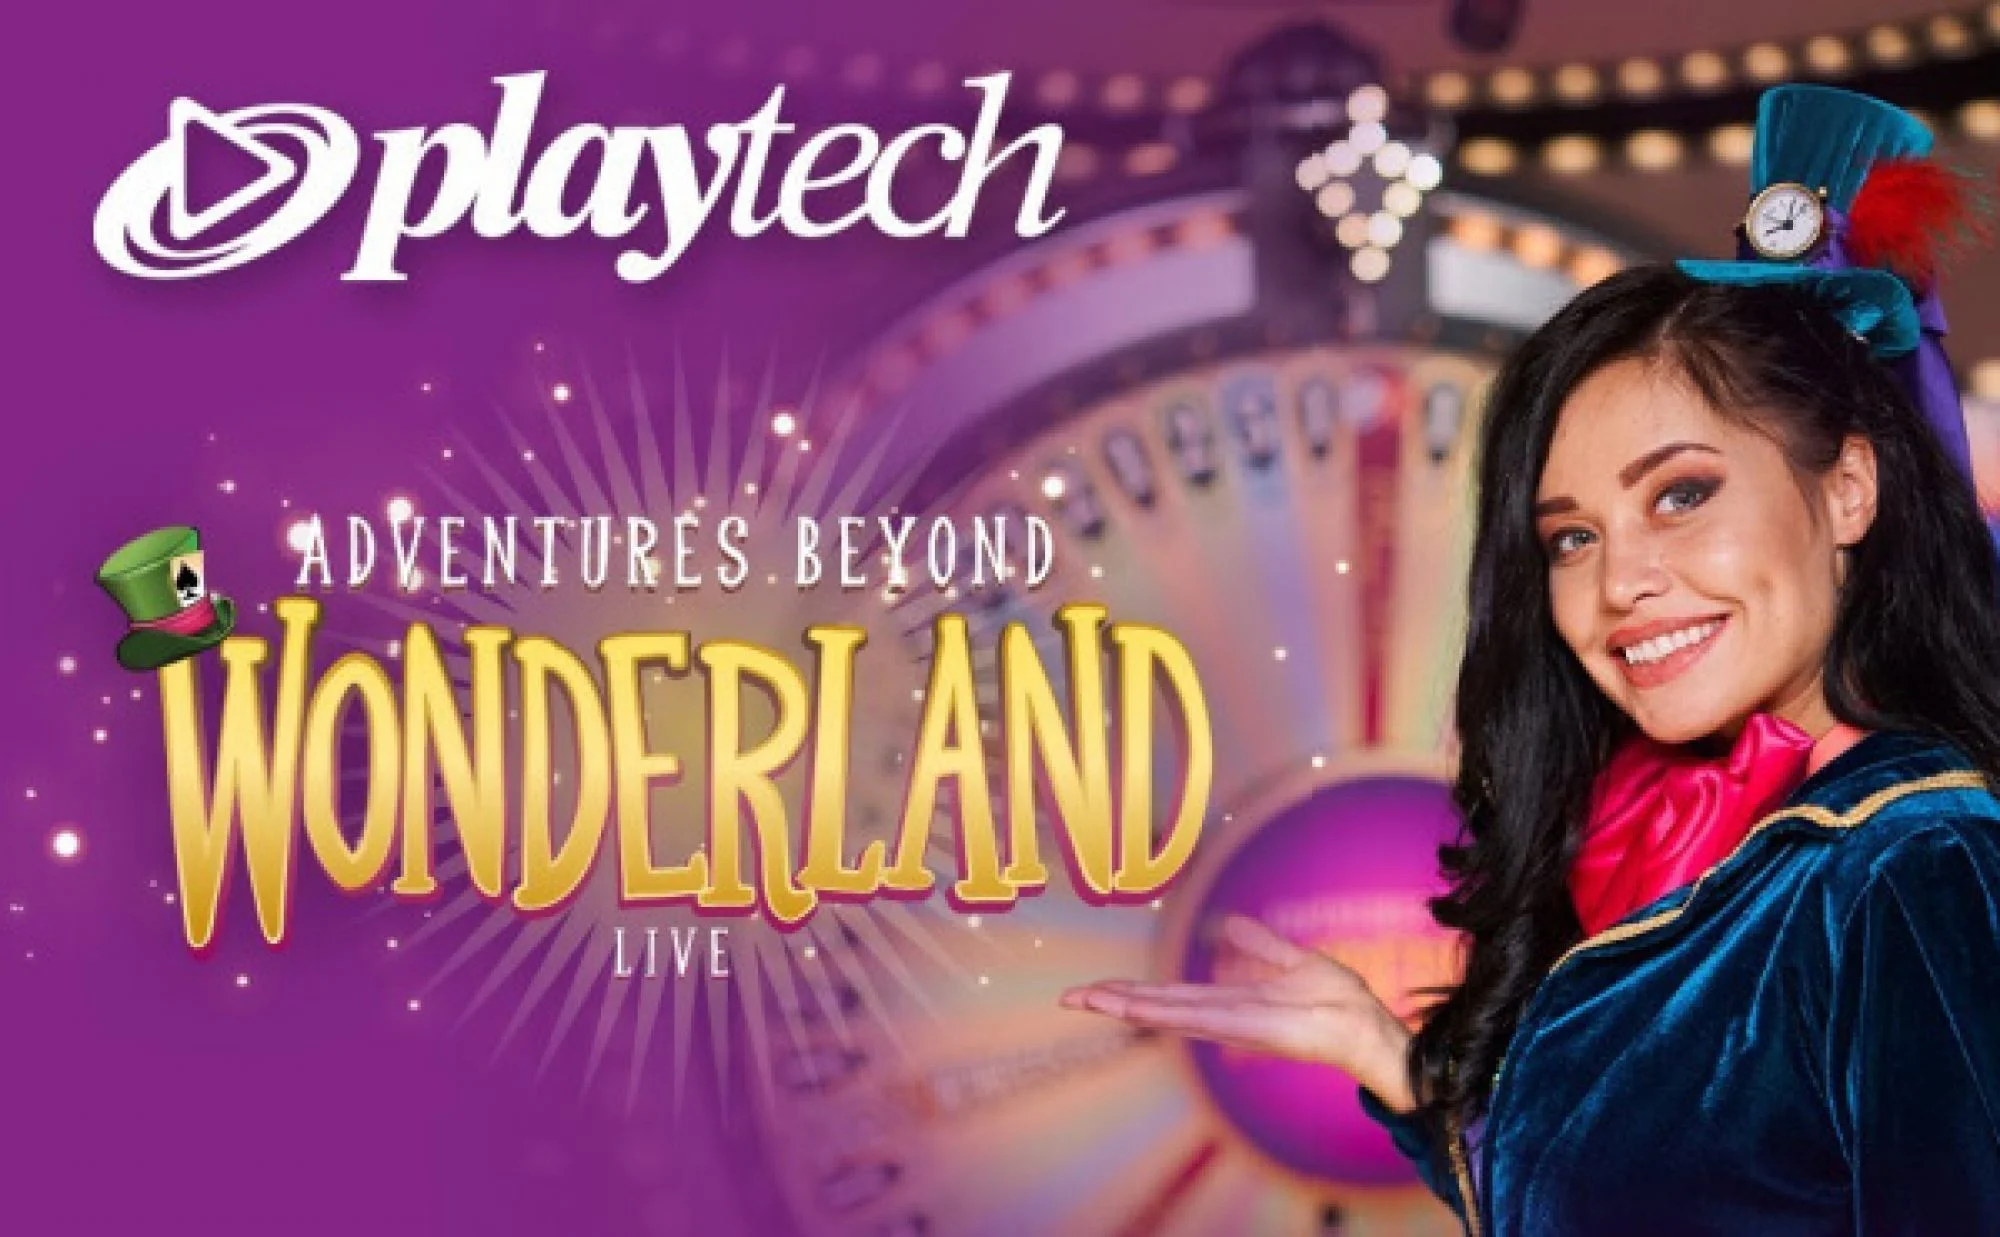 Adventures beyond wonderland. Adventures Beyond Wonderland Live. Beyond Wonderland 2023. Wonderland Live Adventures Beyond самый максимальный Икс.